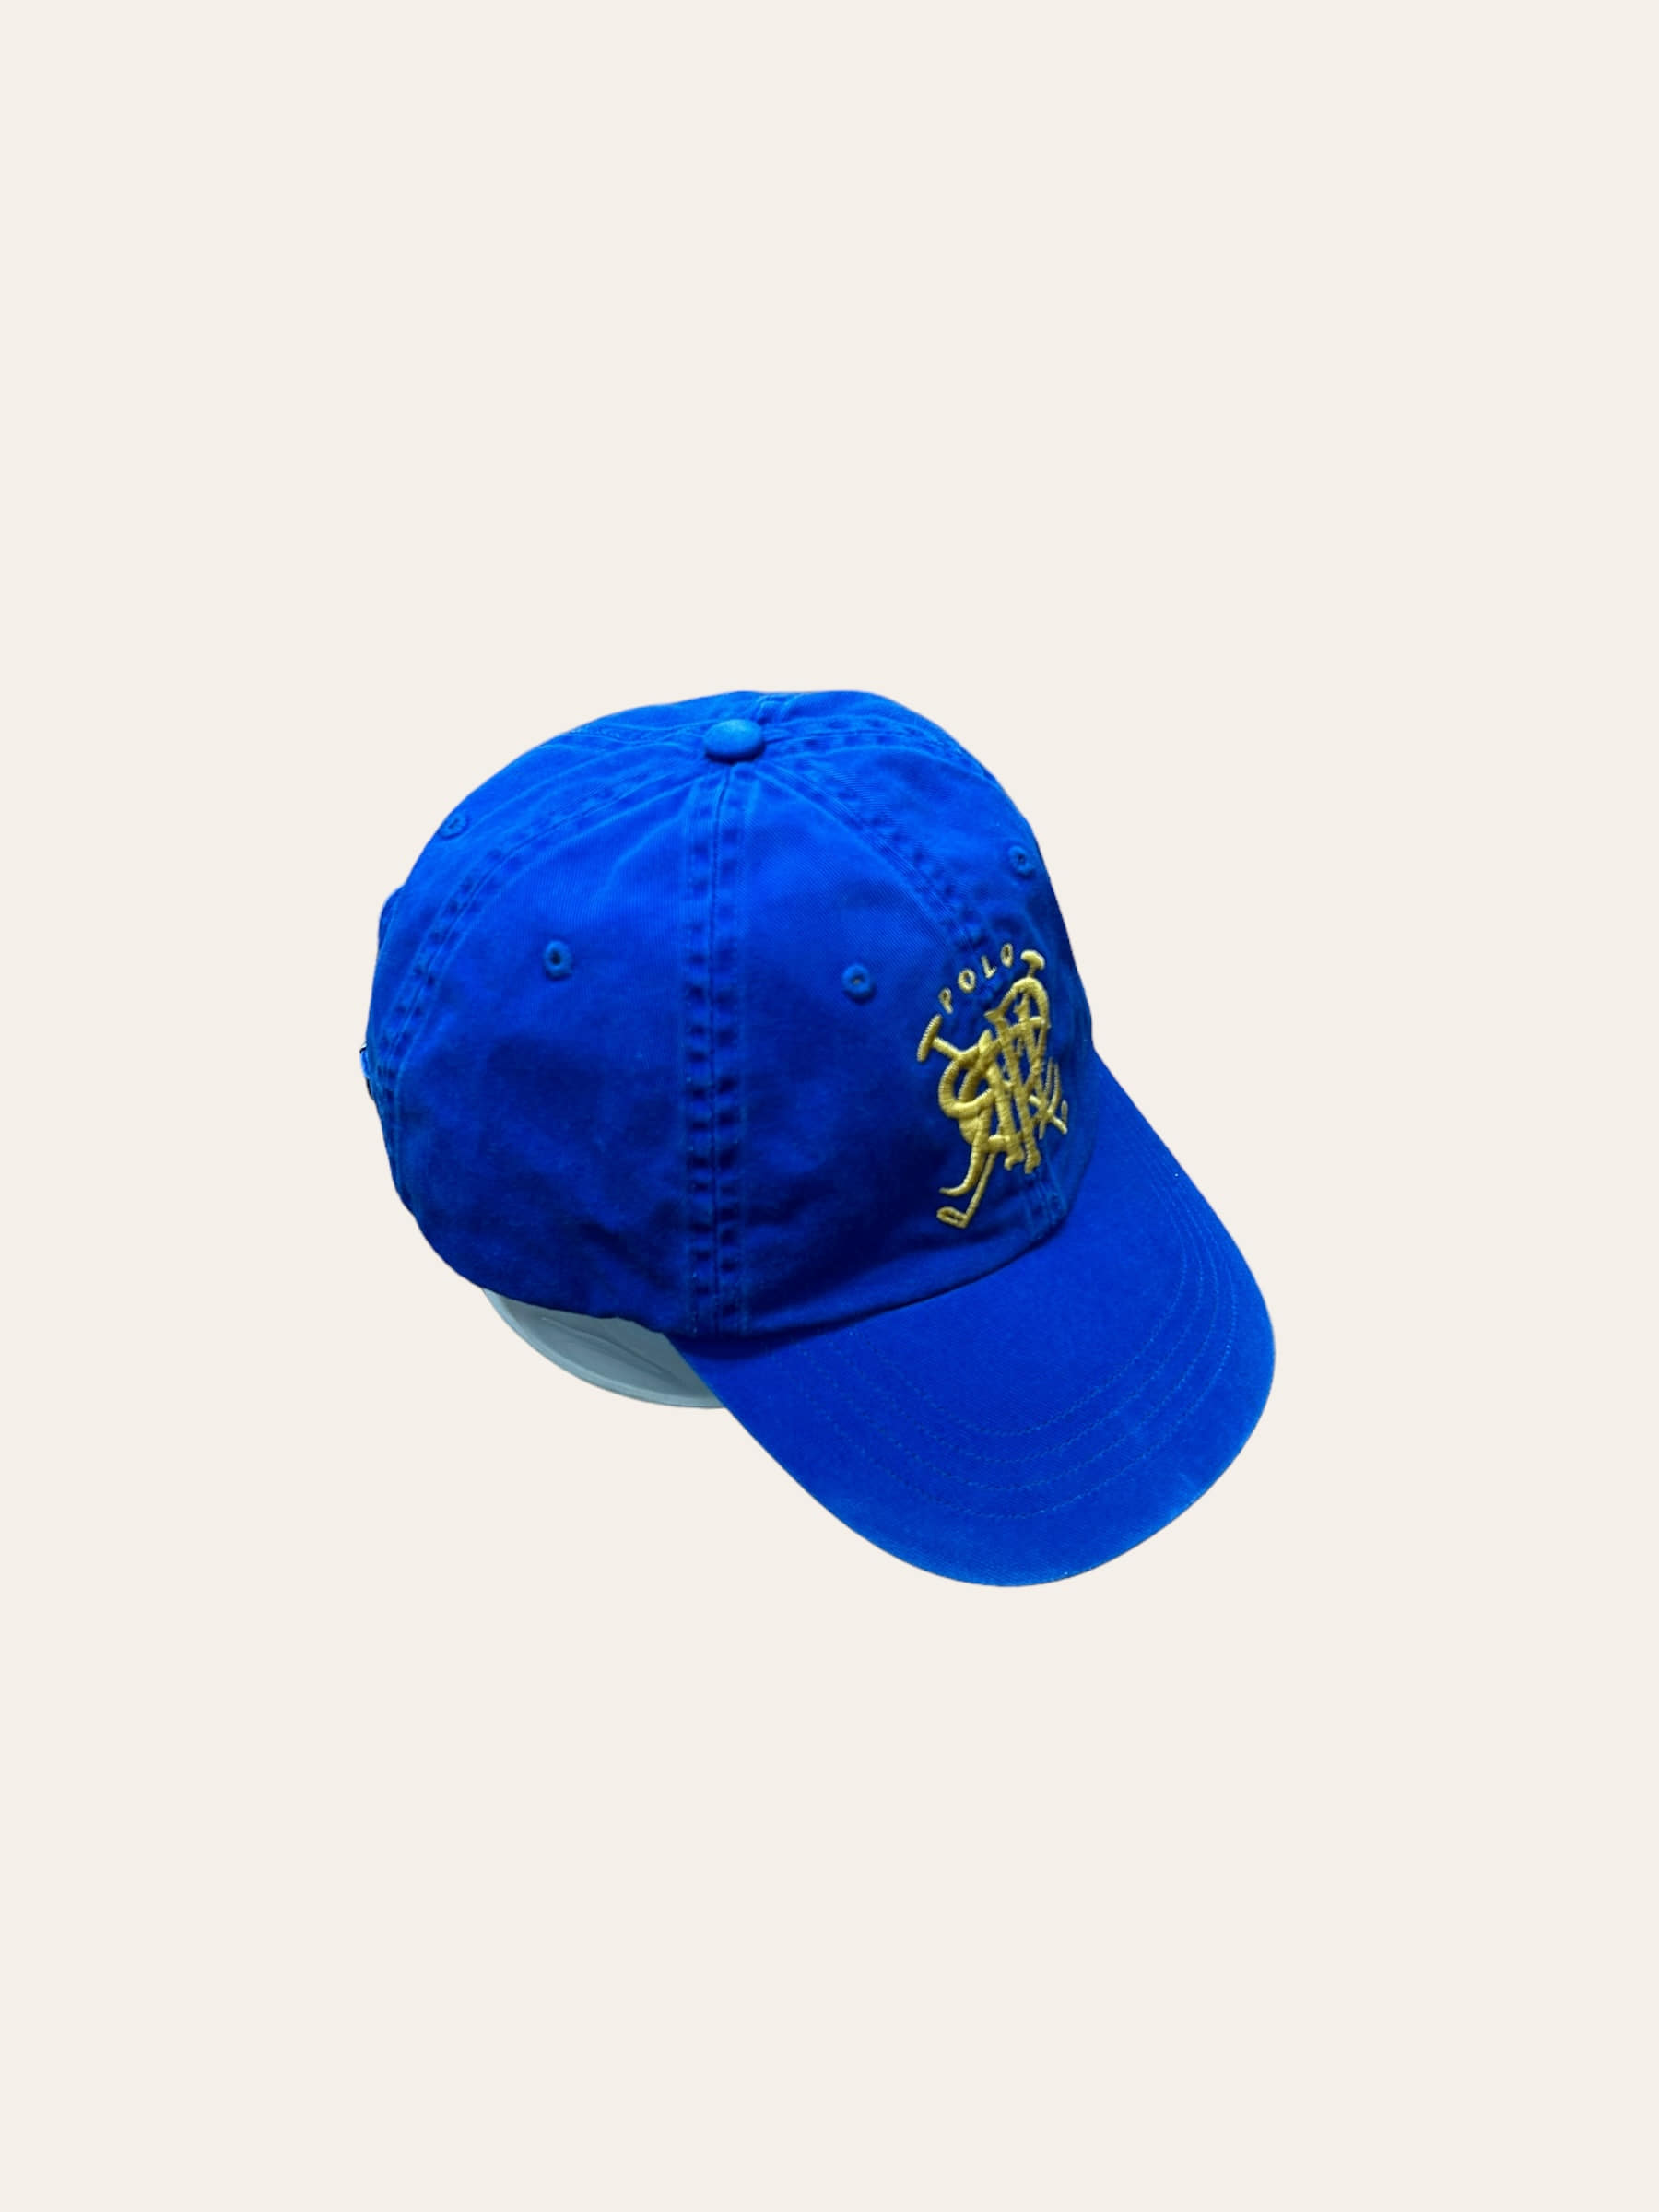 Polo ralph lauren ocean blue gothic logo cap